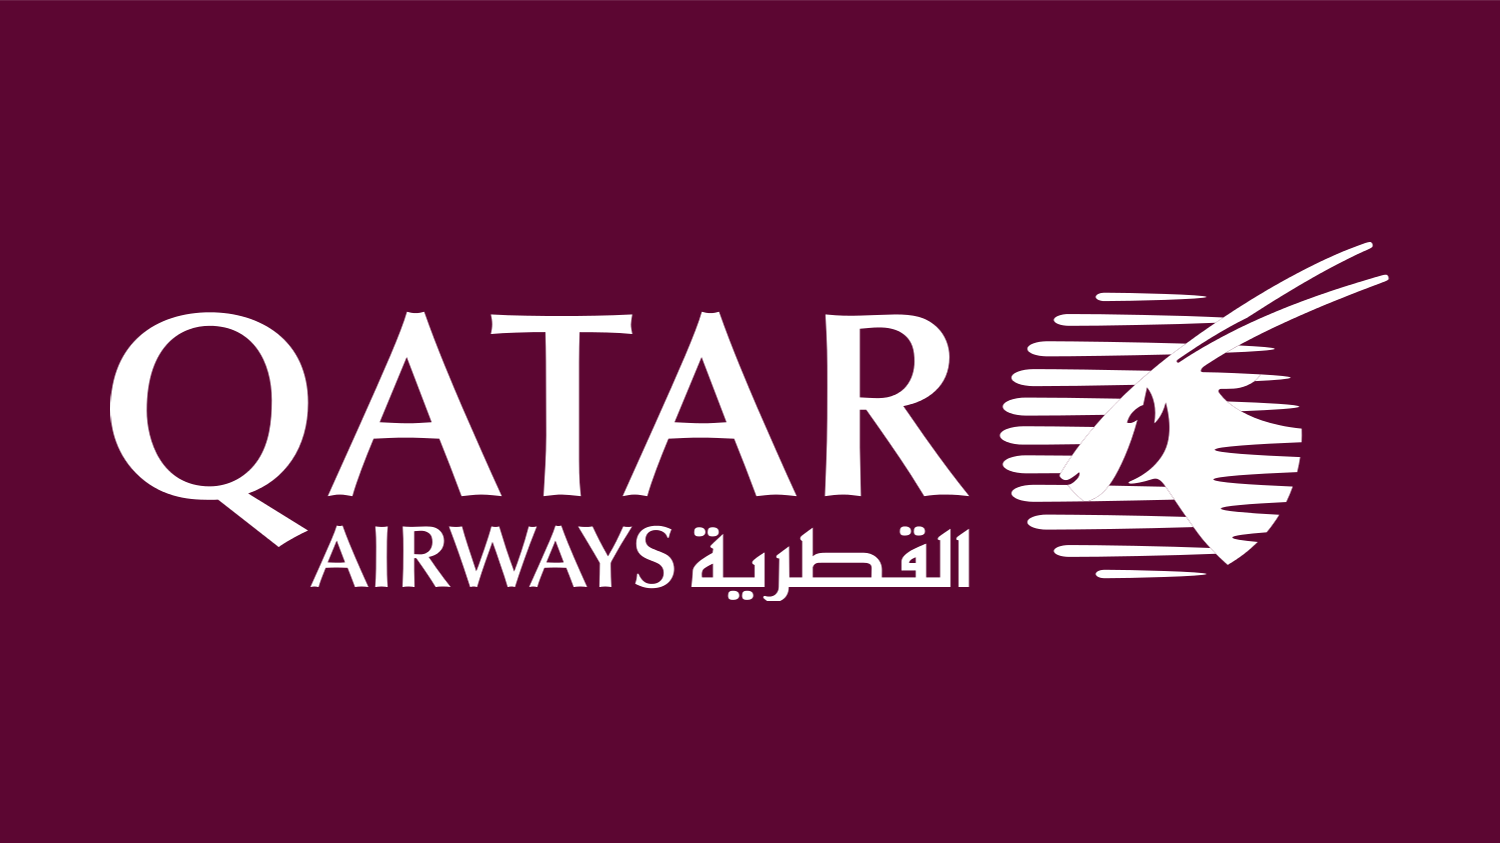 QATAR AIRWAYS COUPON CODE: GET 10% OFF ON FLIGHTS (Feb 05-06)